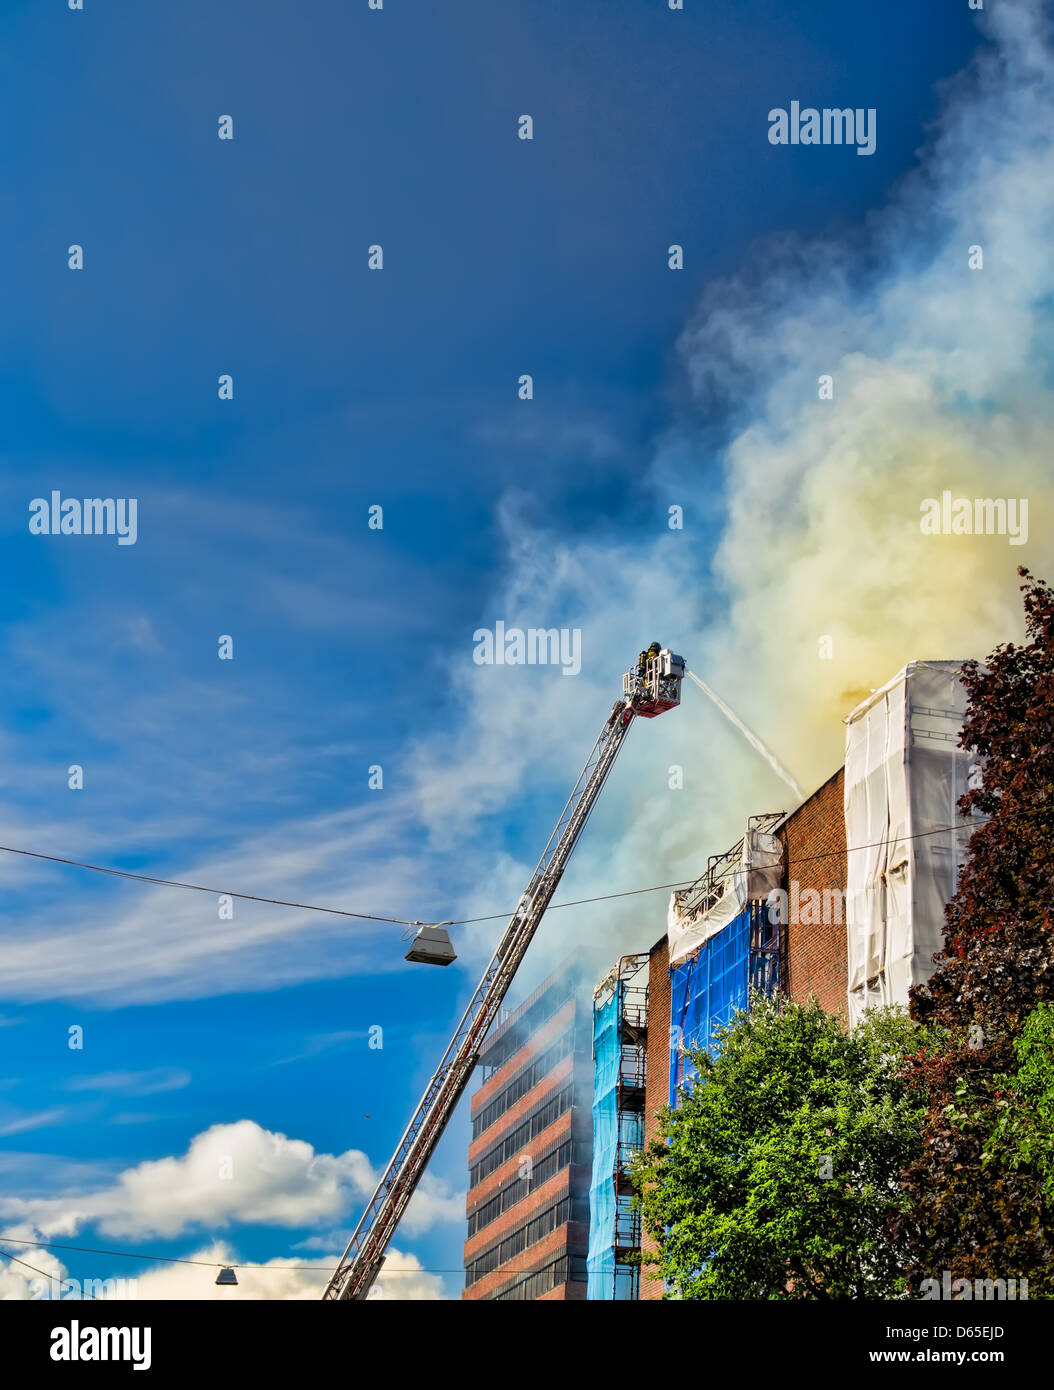 Firemen on a ladder extinguishing fire Stock Photo